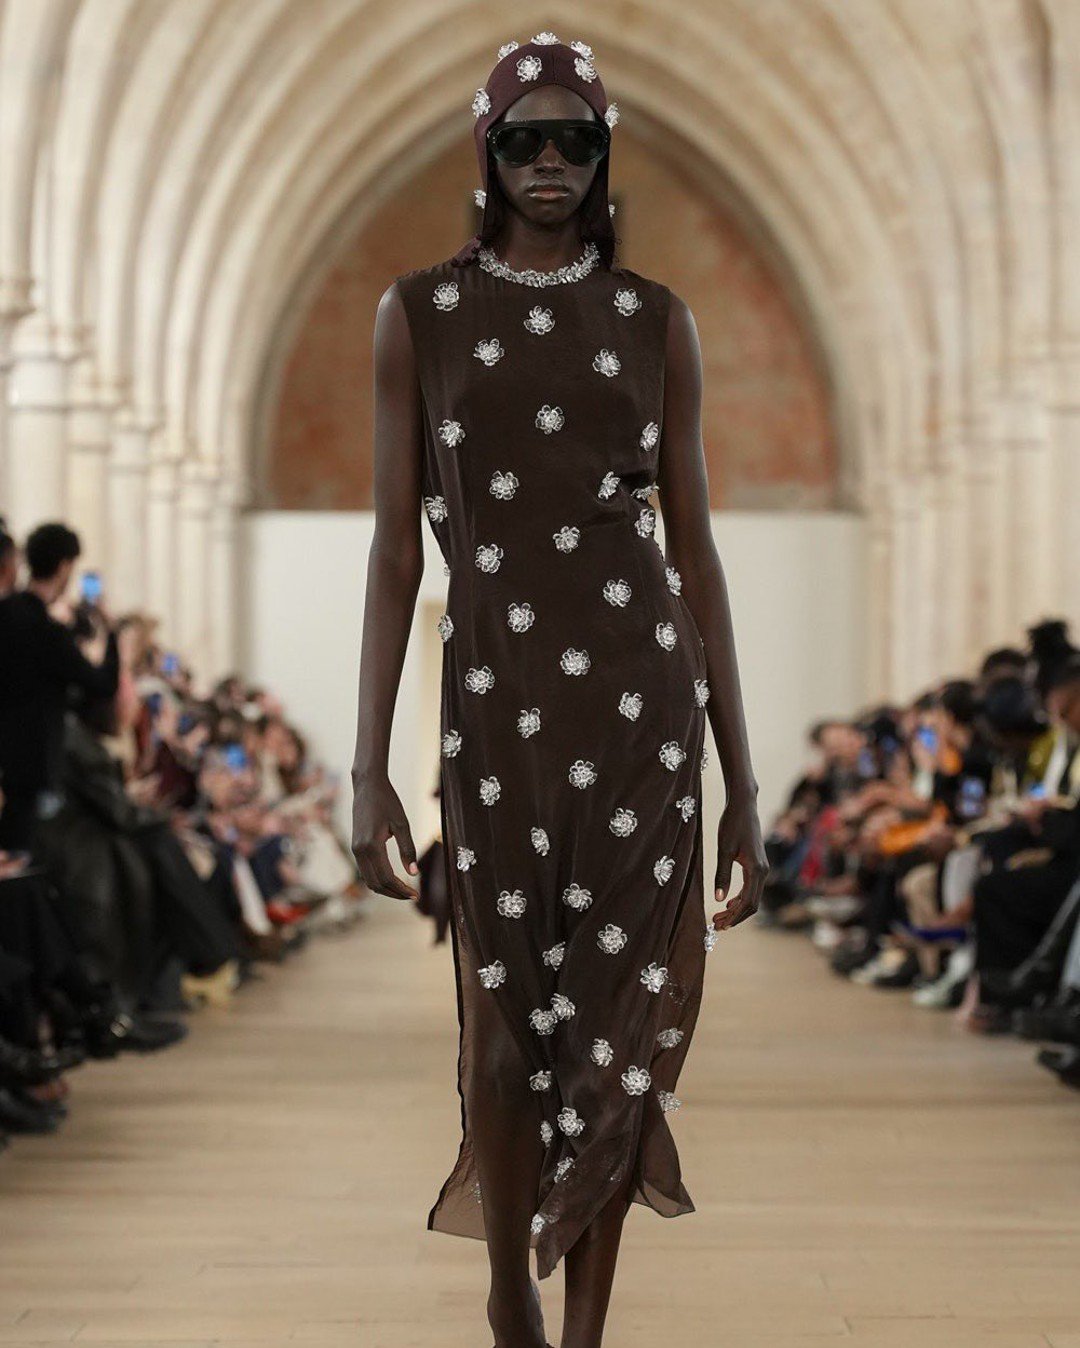 Lanvin - vestido marrom - Paris Fashion Week - inverno - Paris - https://stealthelook.com.br